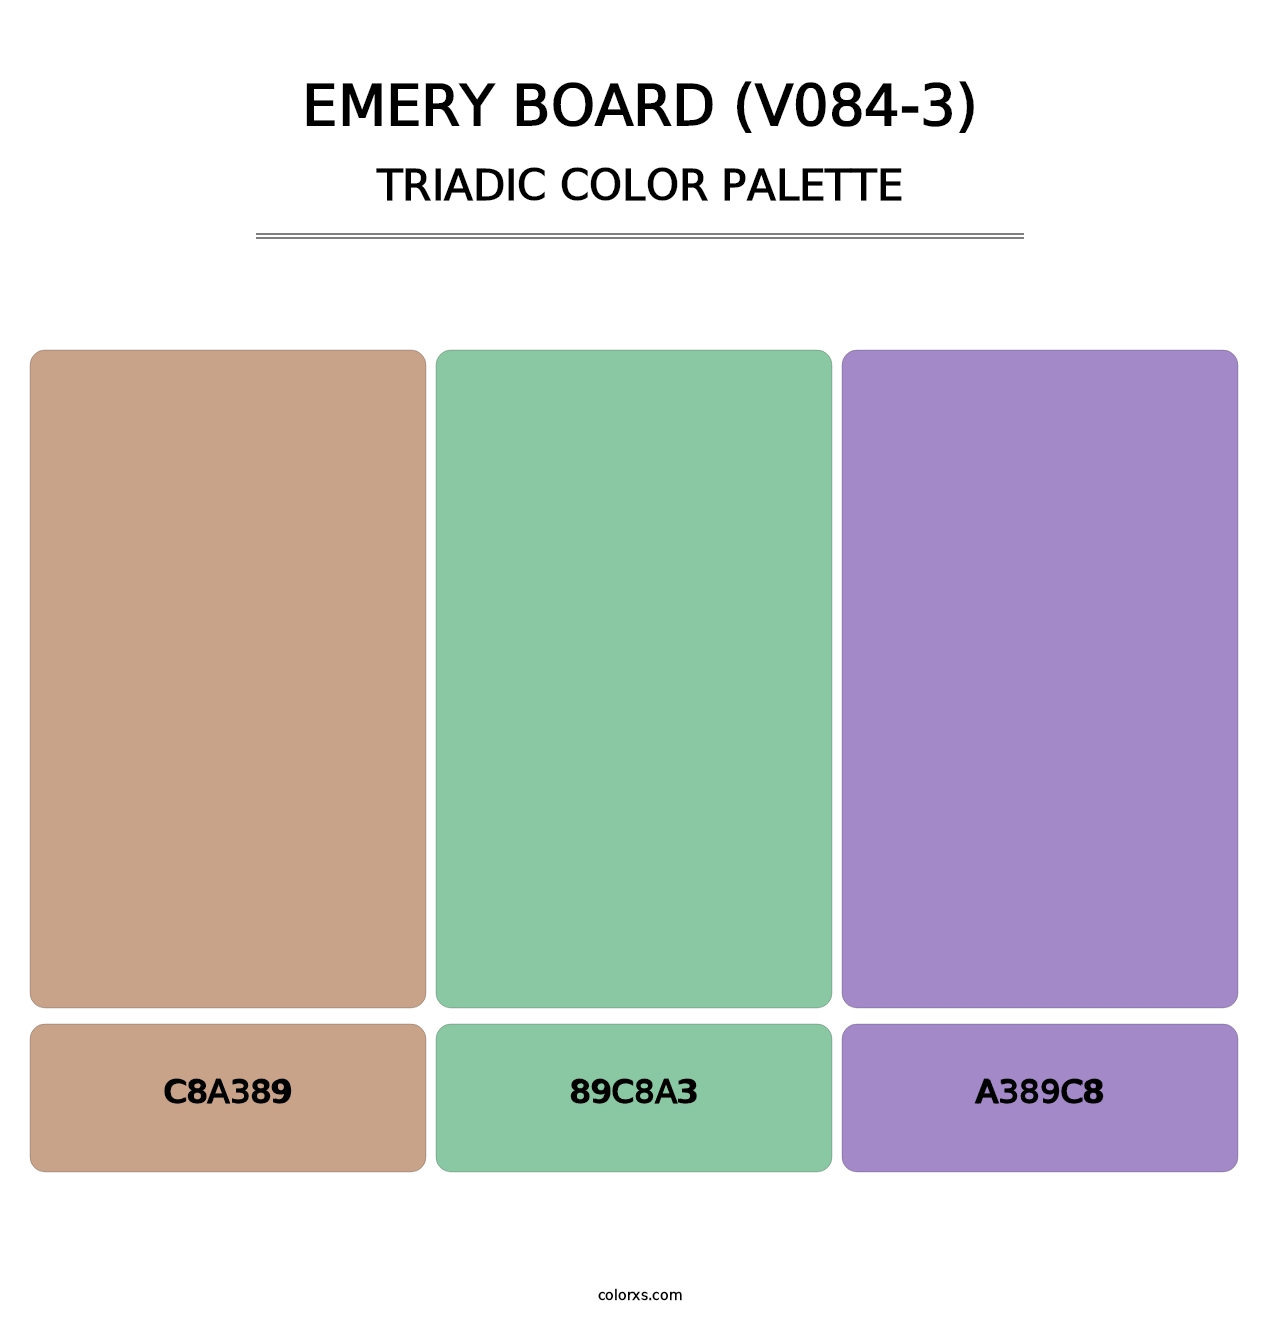 Emery Board (V084-3) - Triadic Color Palette